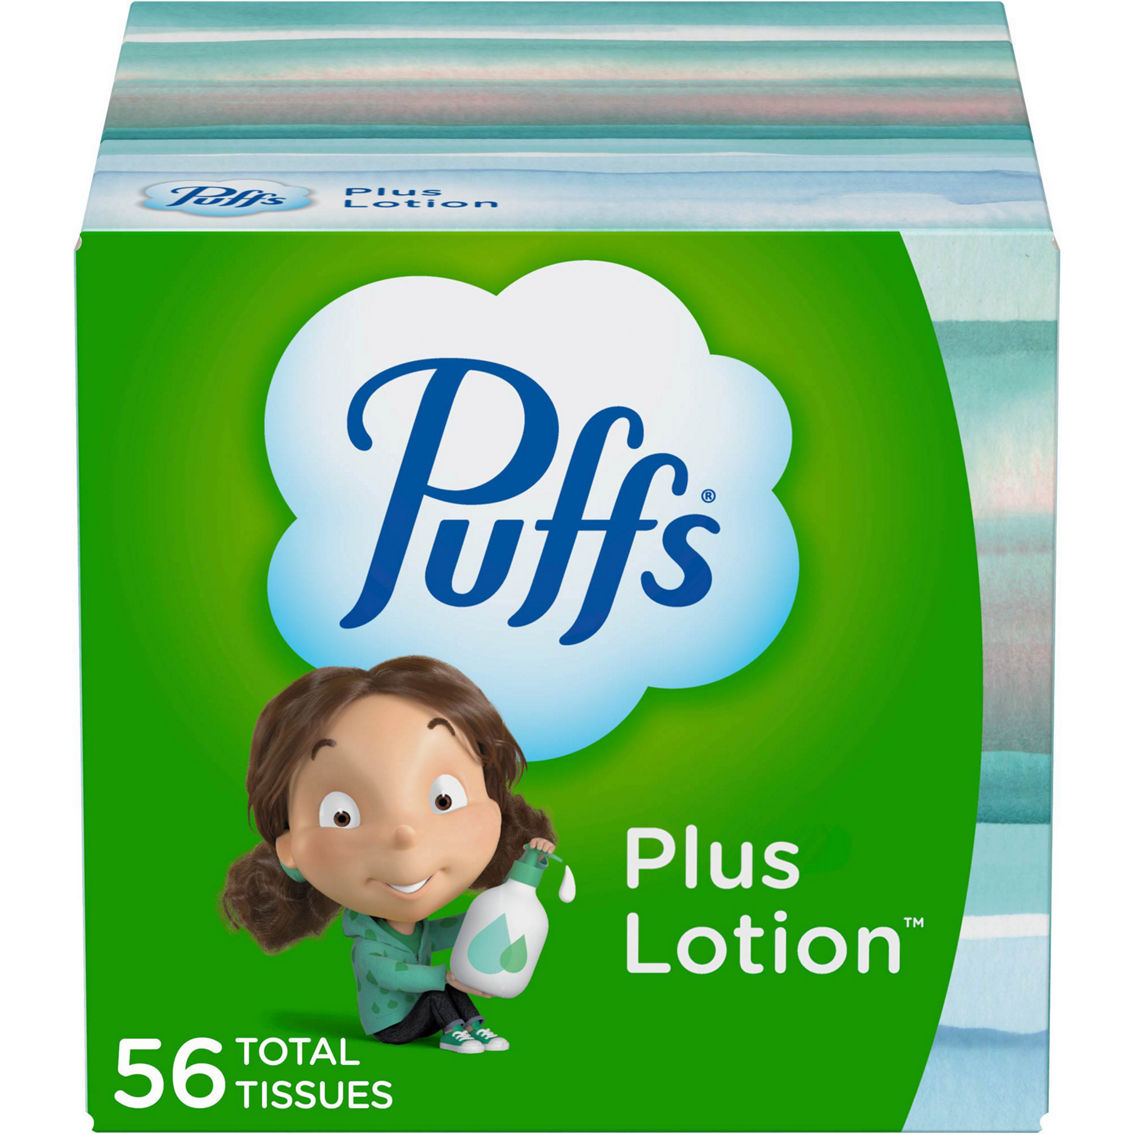 Puffs Plus Lotion Facial Tissue, White, 1-Ply, 8 1/5 X 8 2/5, 56